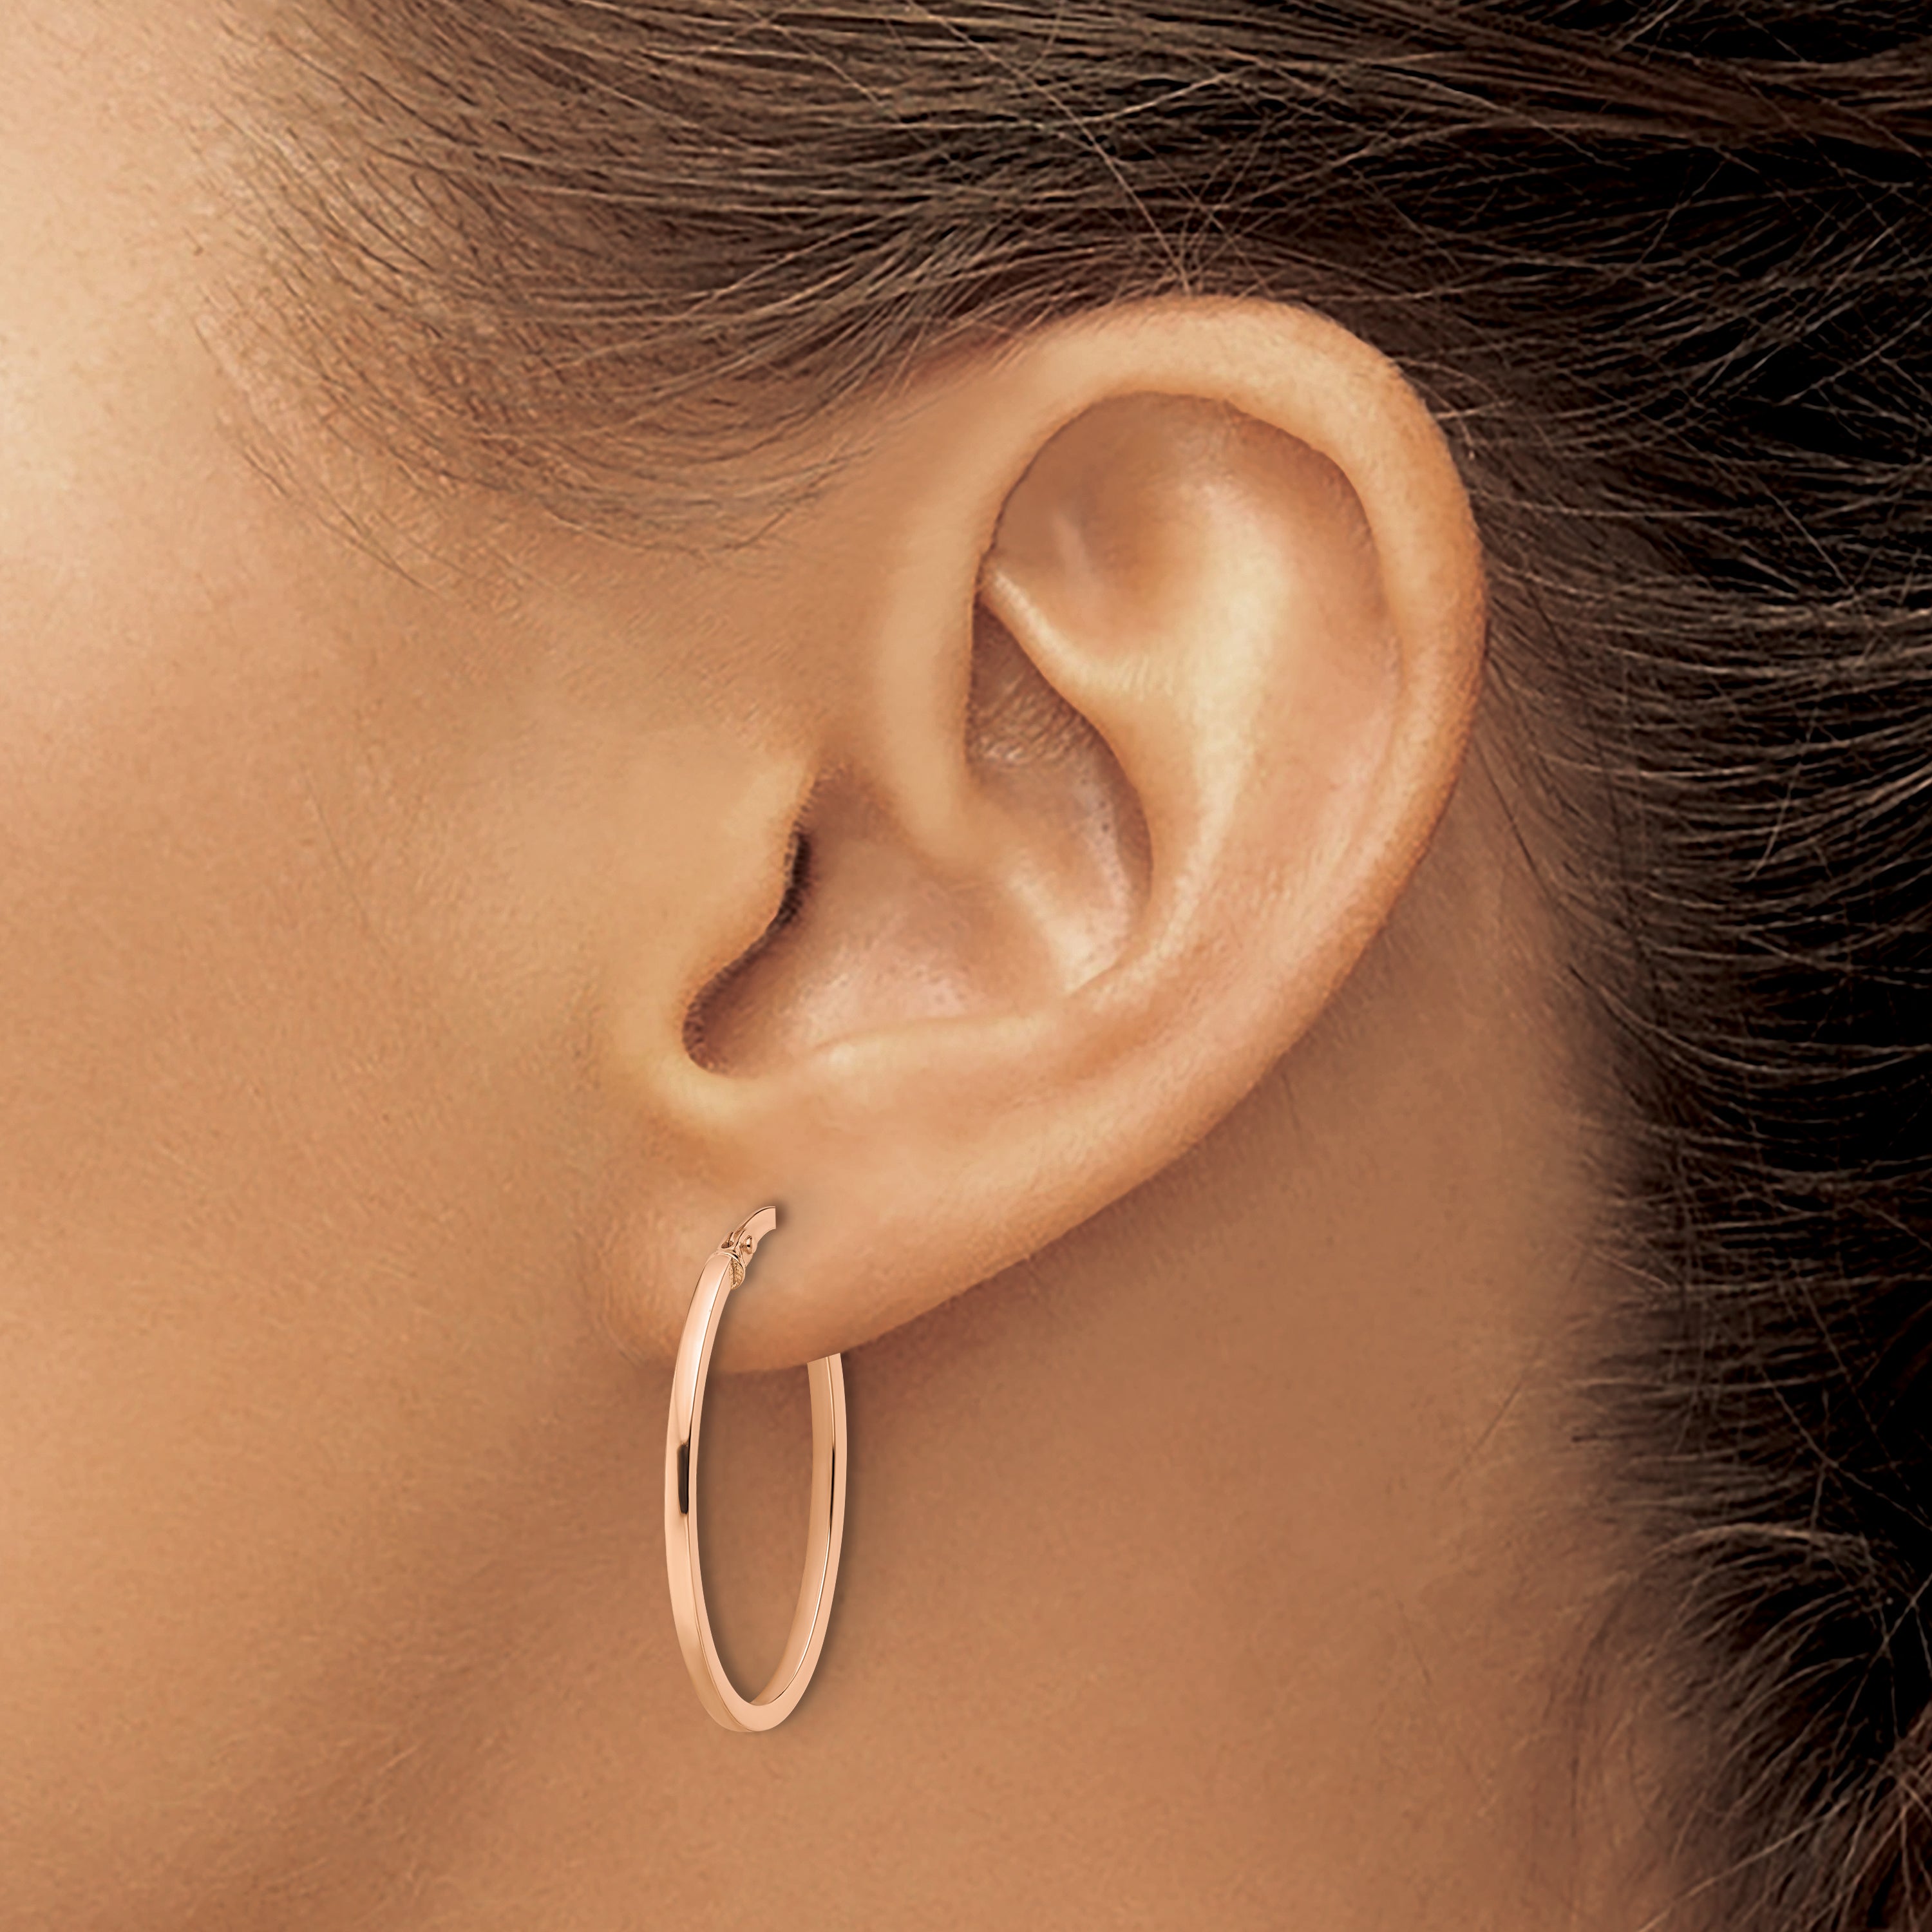 10K Rose Gold Polished Oval Hoop Earrings